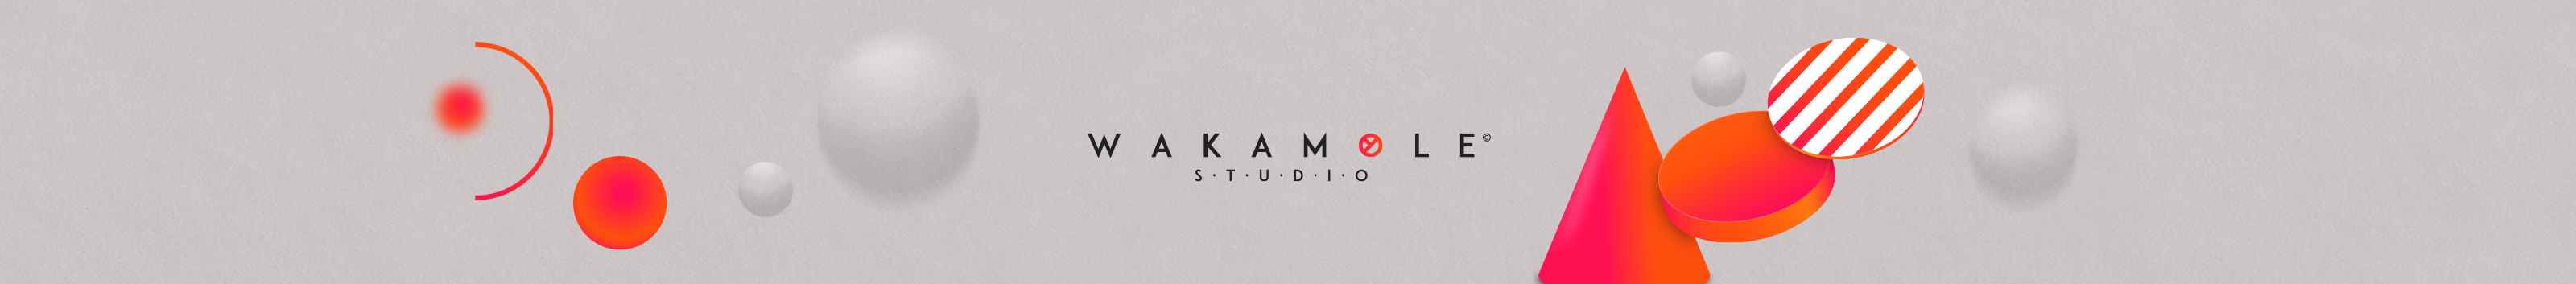 Banner de perfil de Wakamole Studio